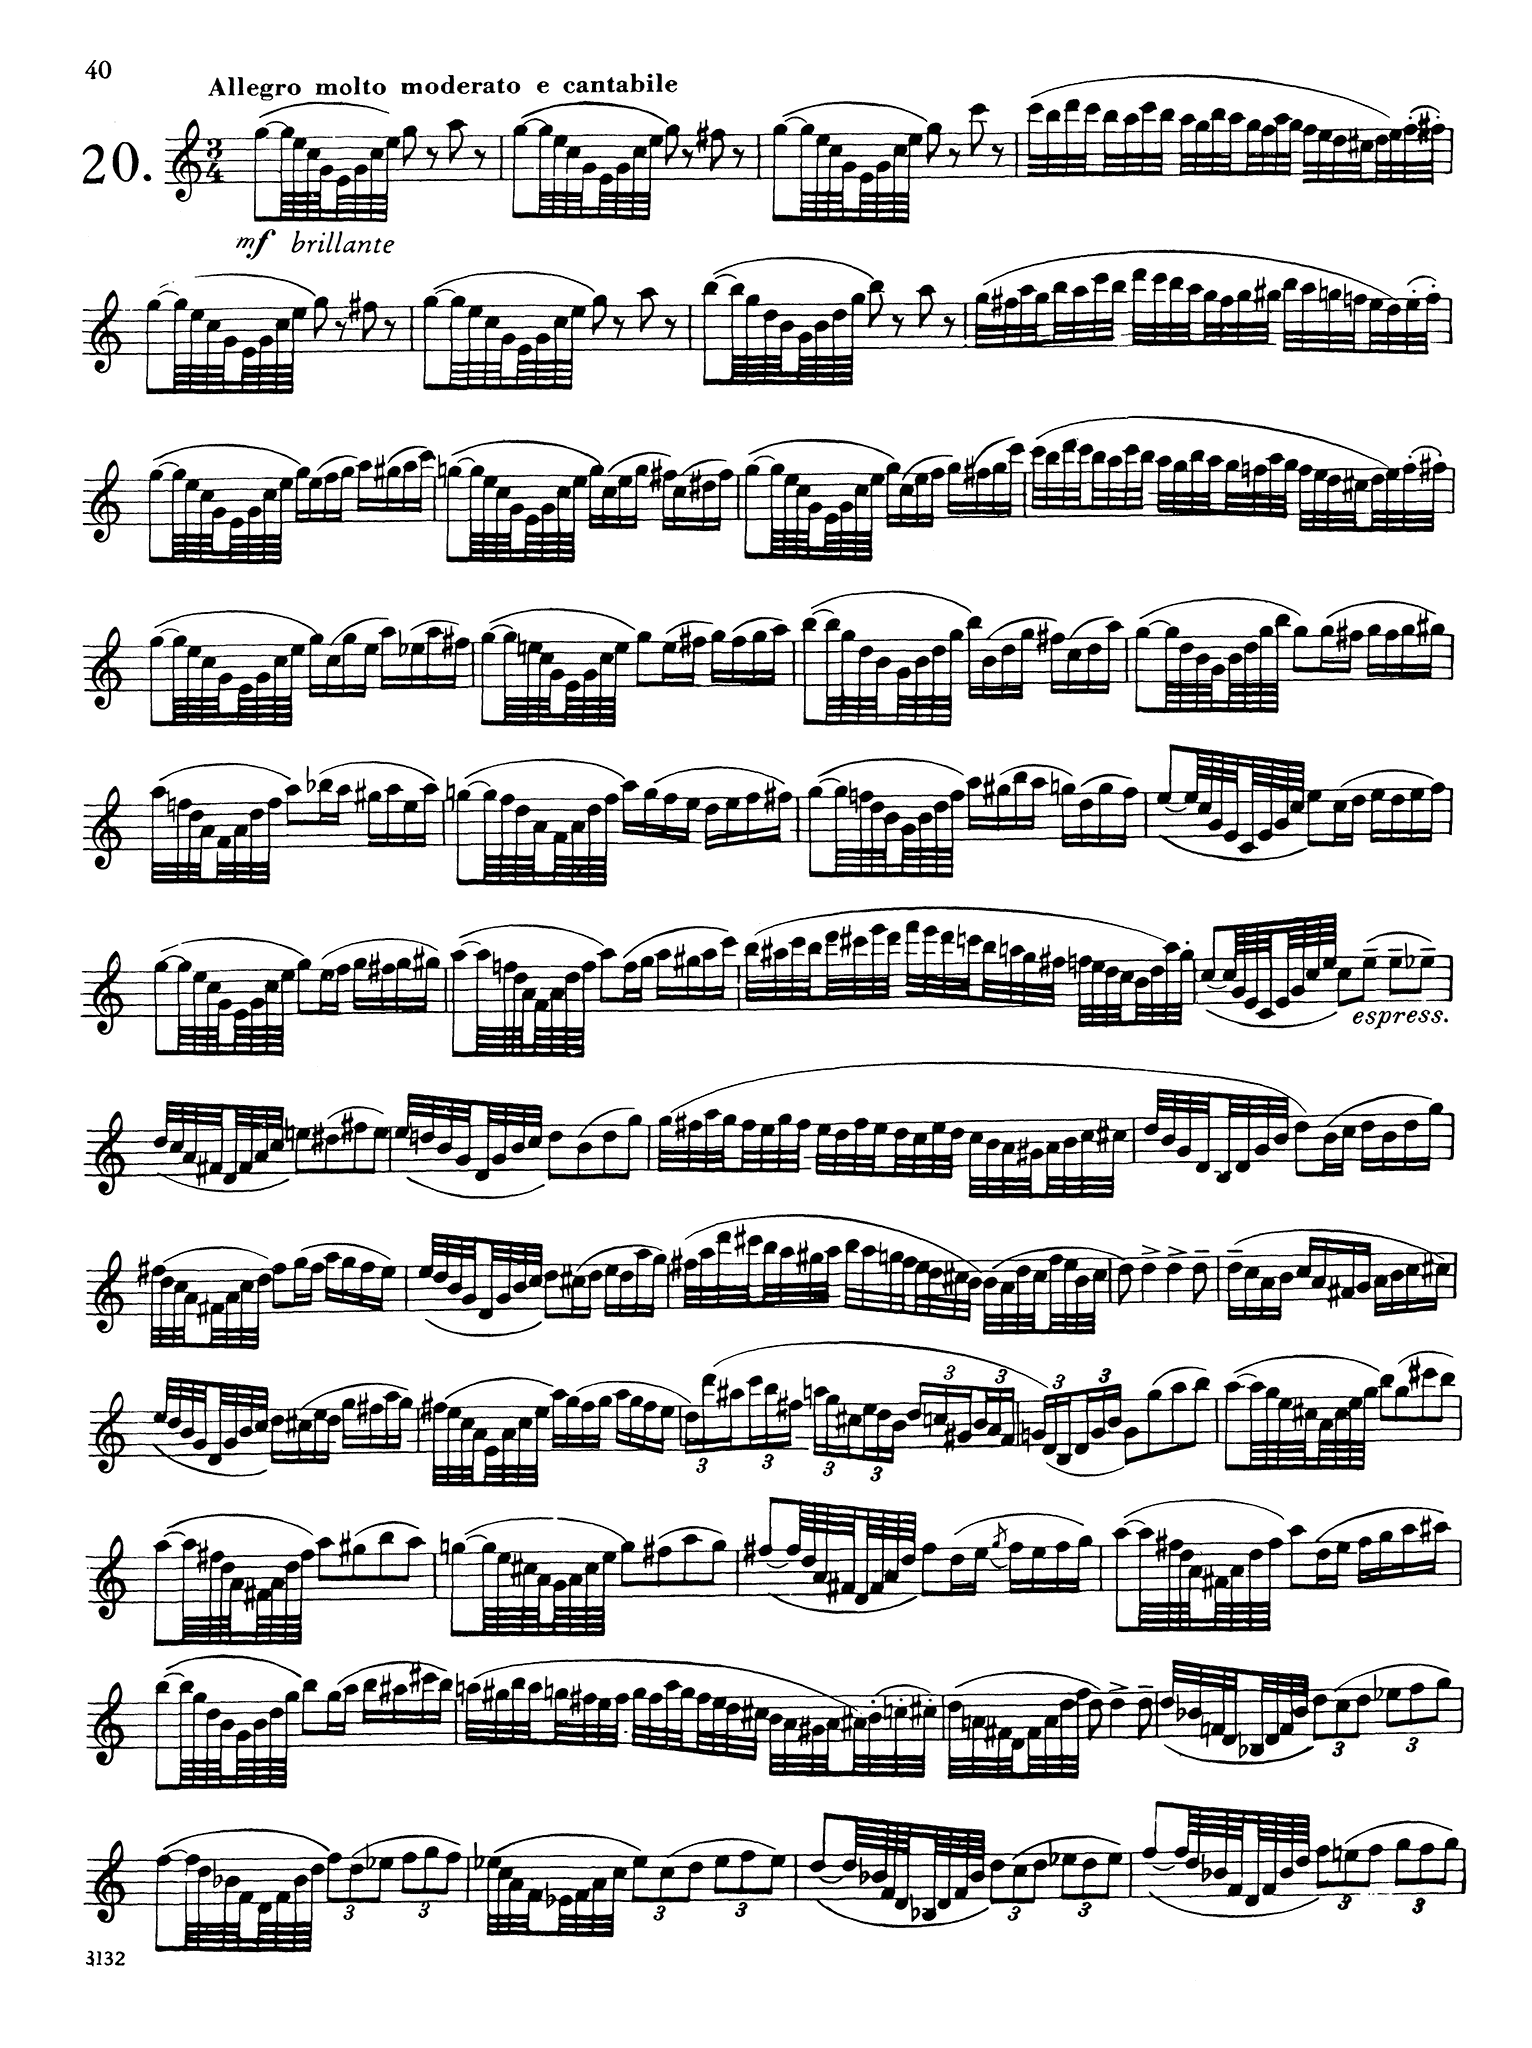 Klosé 20 Characteristic Studies for Clarinet no. 20